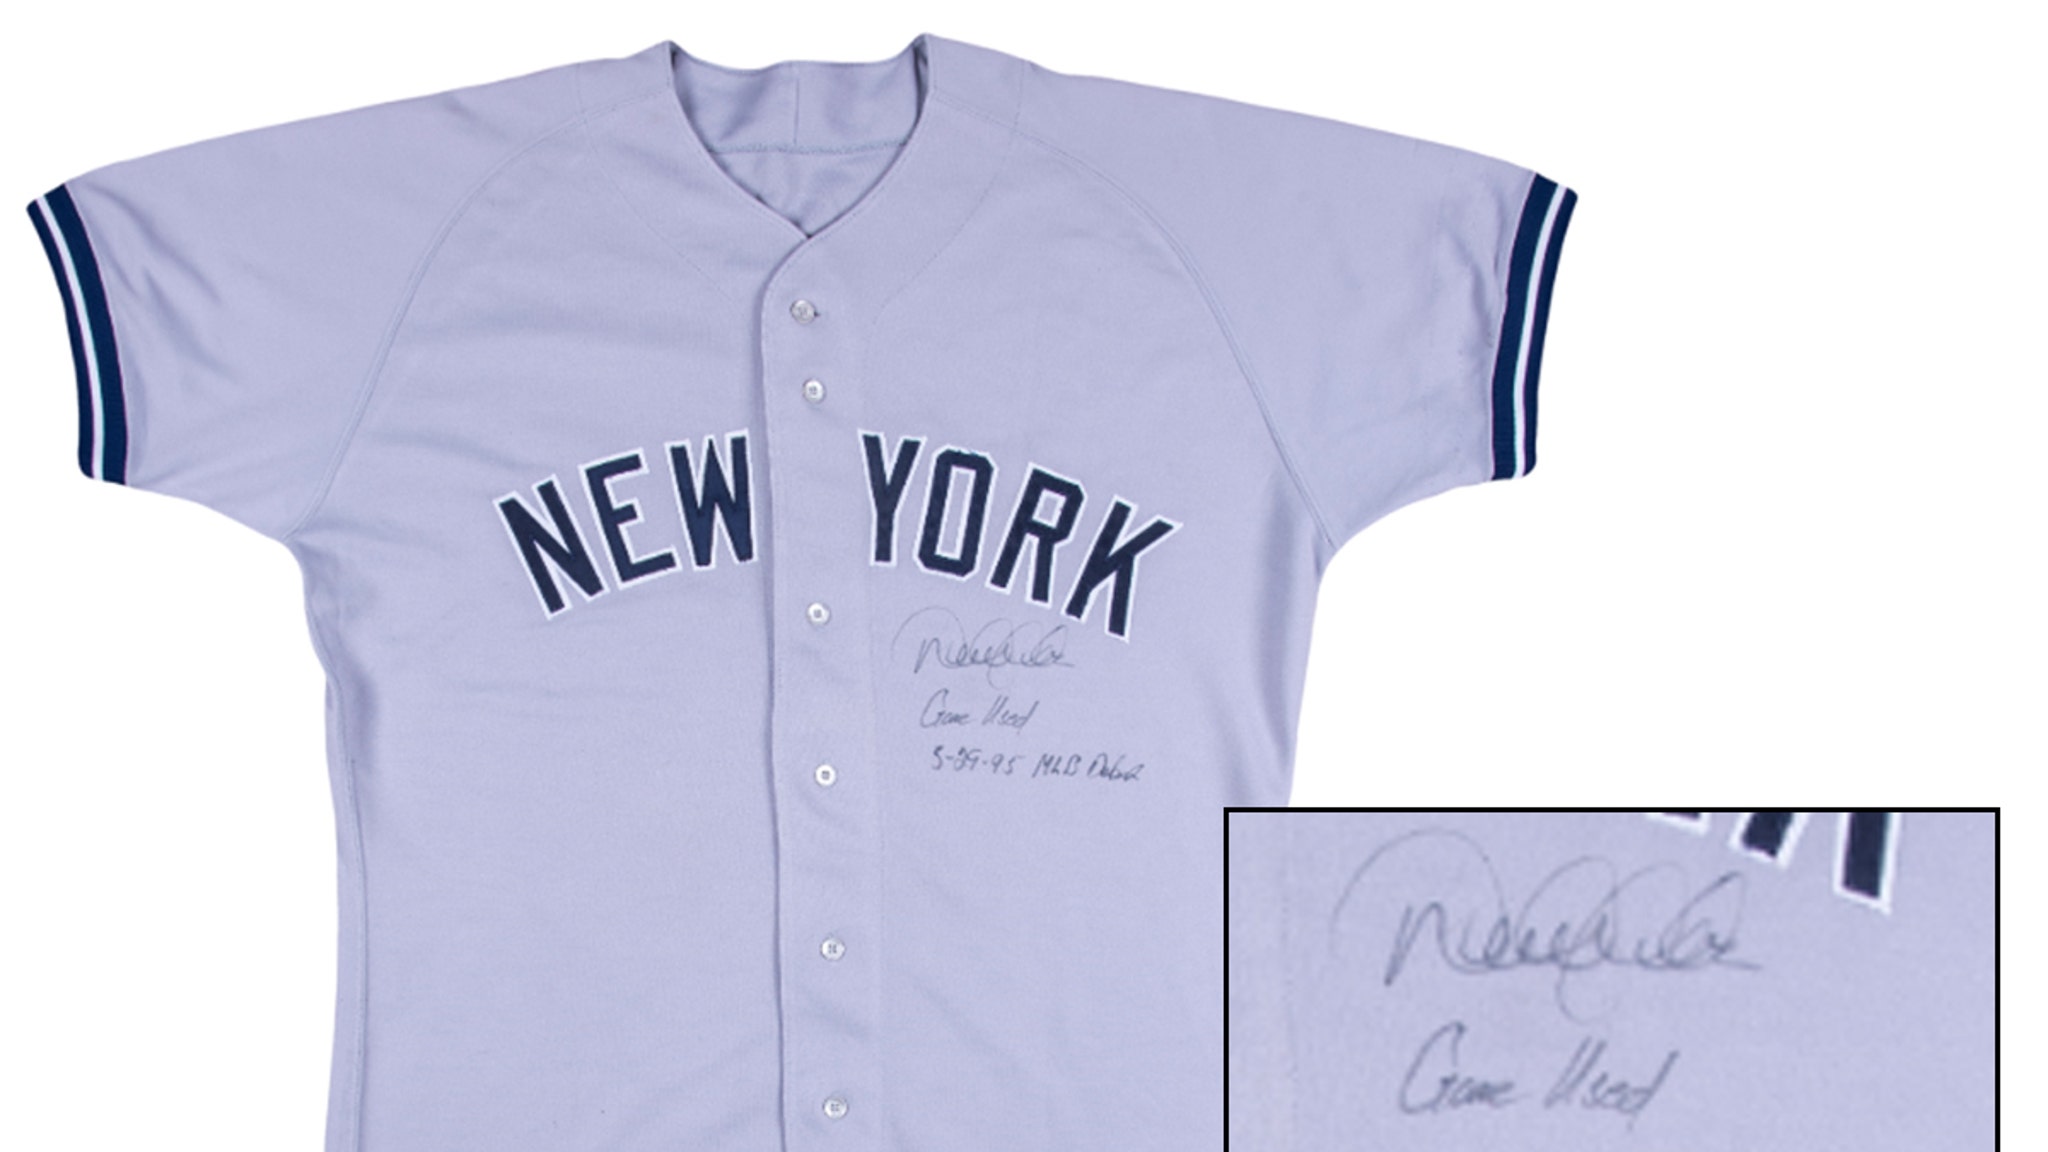 Yankees' Derek Jeter puts on Hall of Fame jersey 